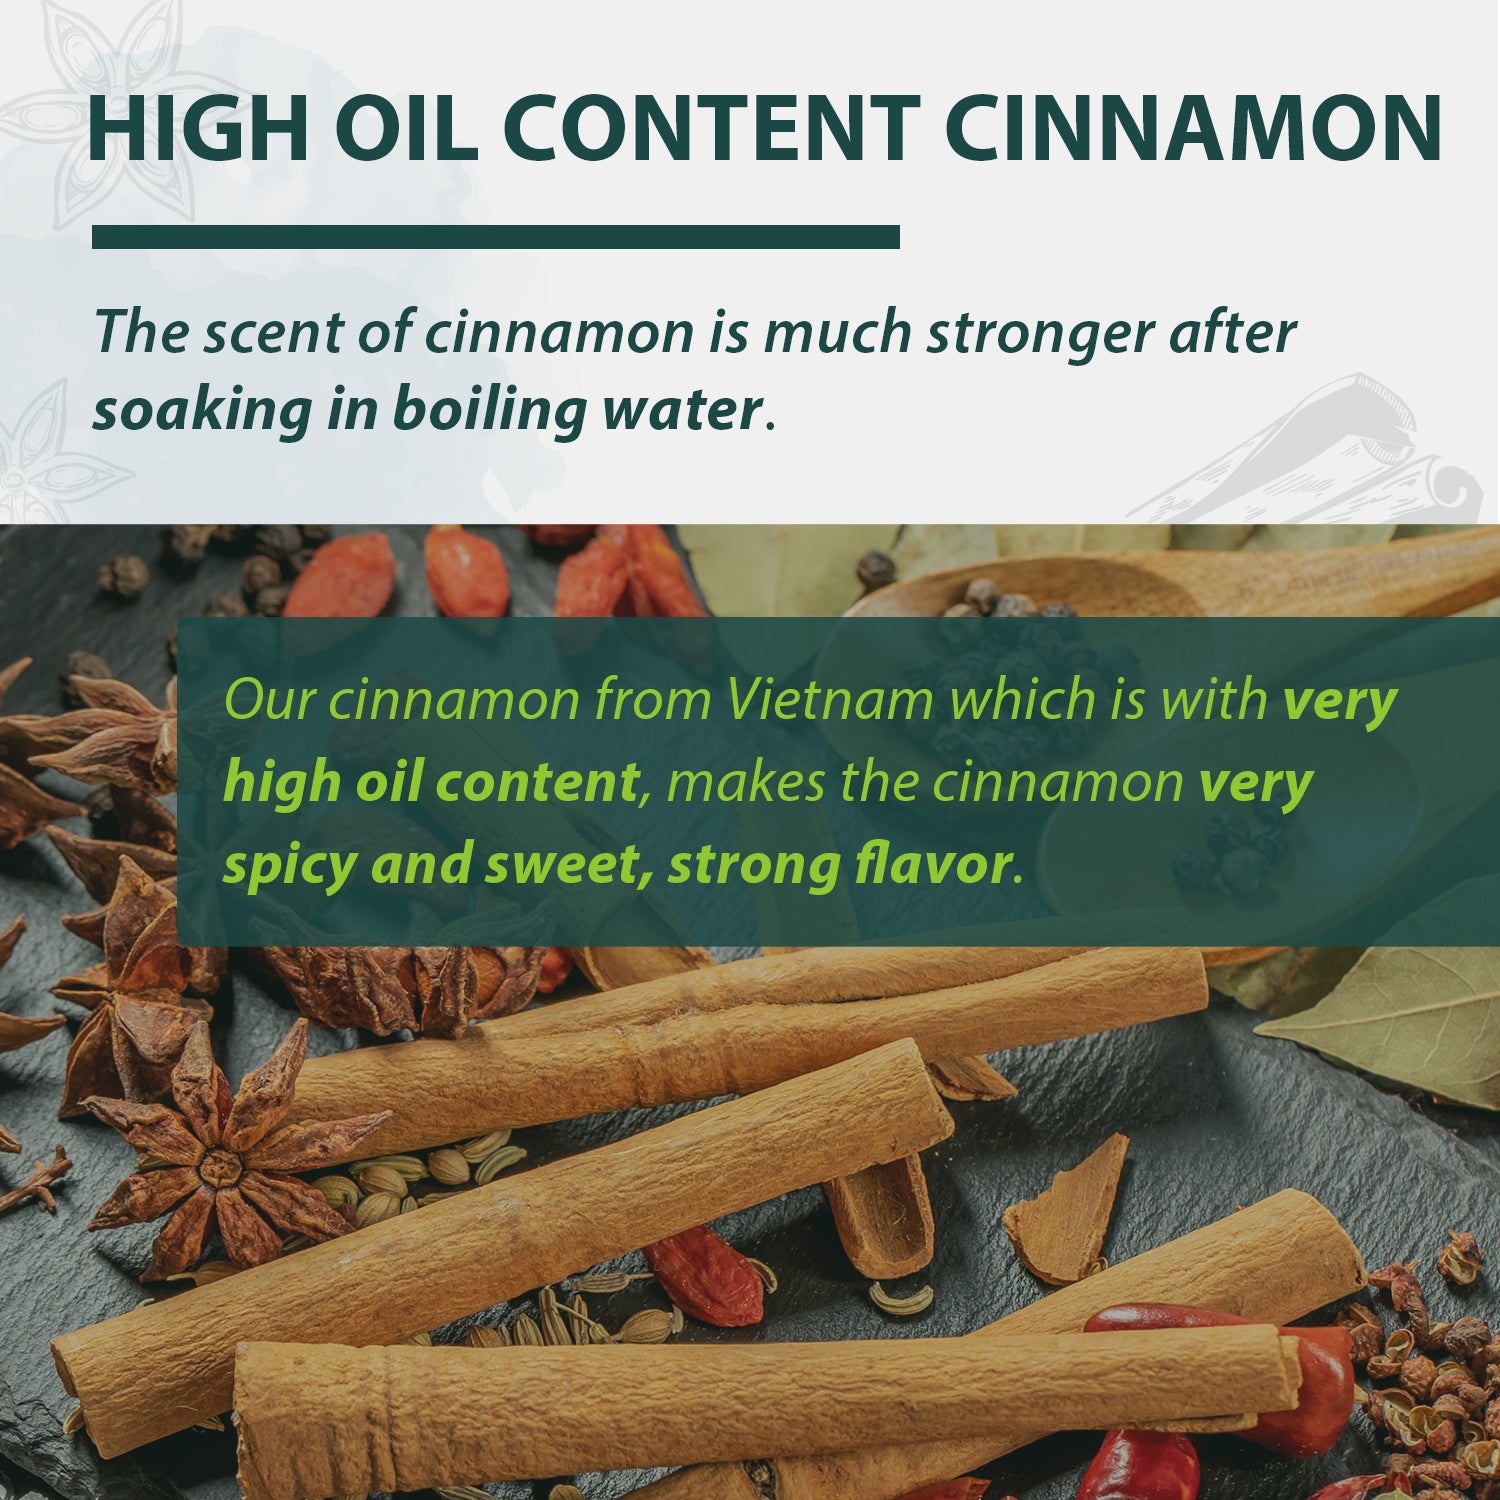 Cinnamon Sticks 3.5 in, 16oz (453g)